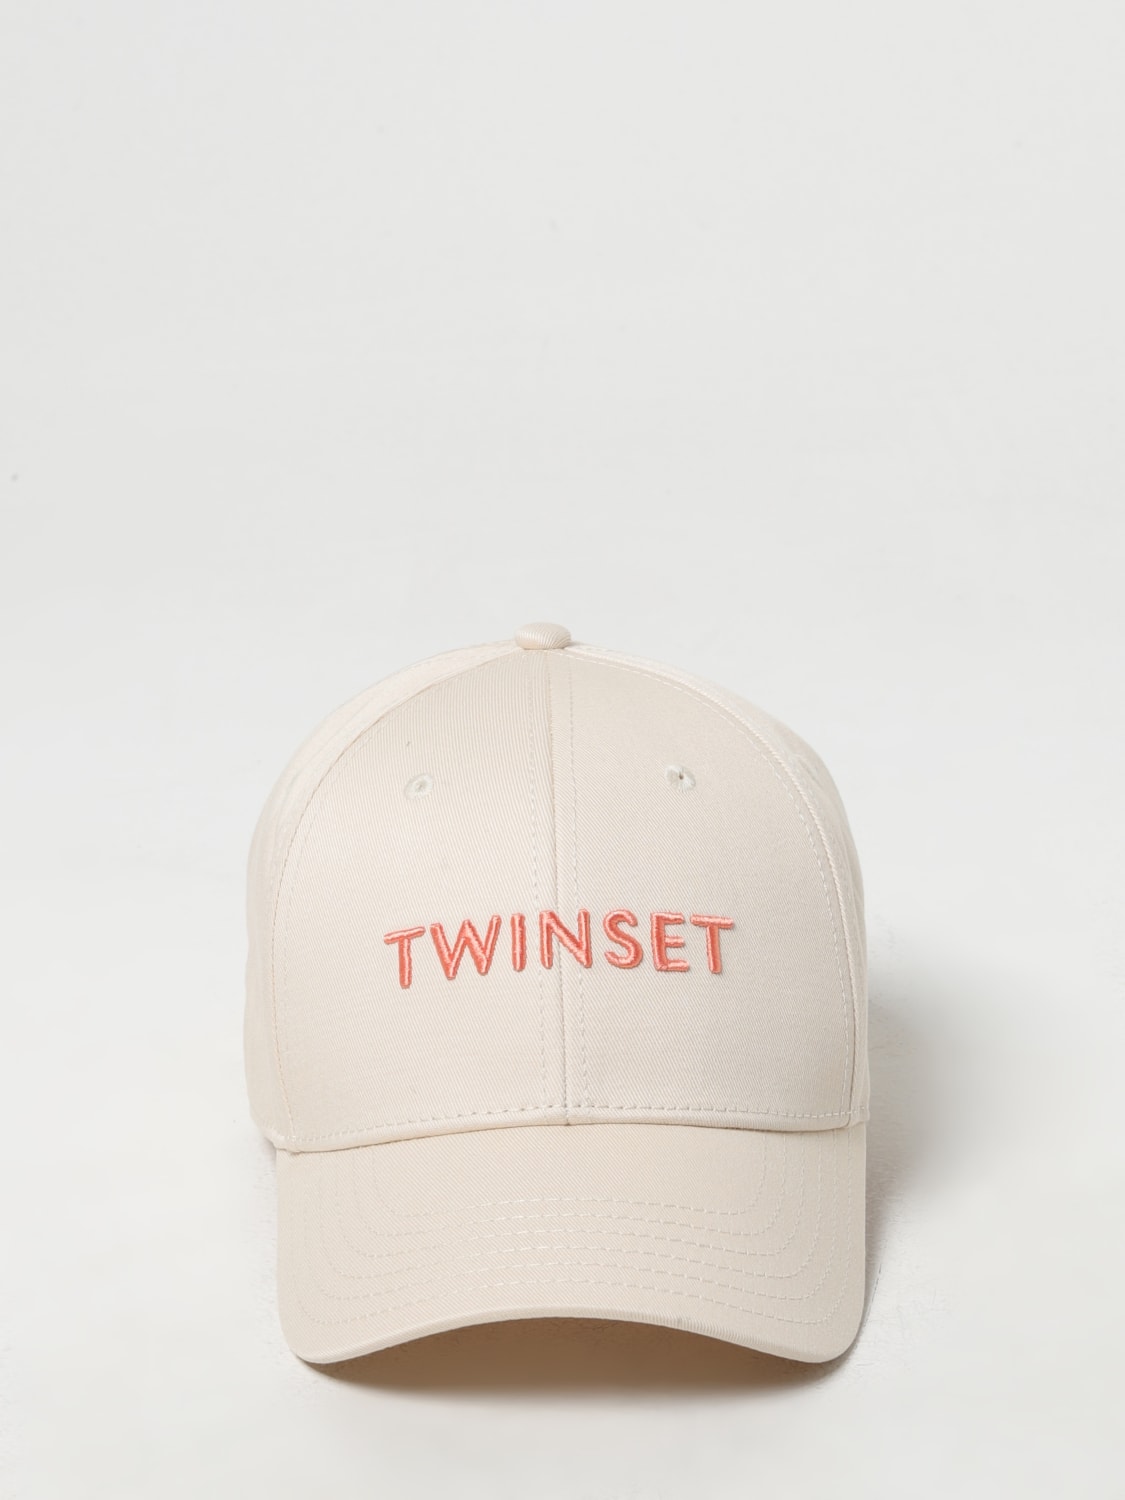 TWINSET：帽子女士- 奶油黄| Twinset 帽子241TO5150 在线就在GIGLIO.COM